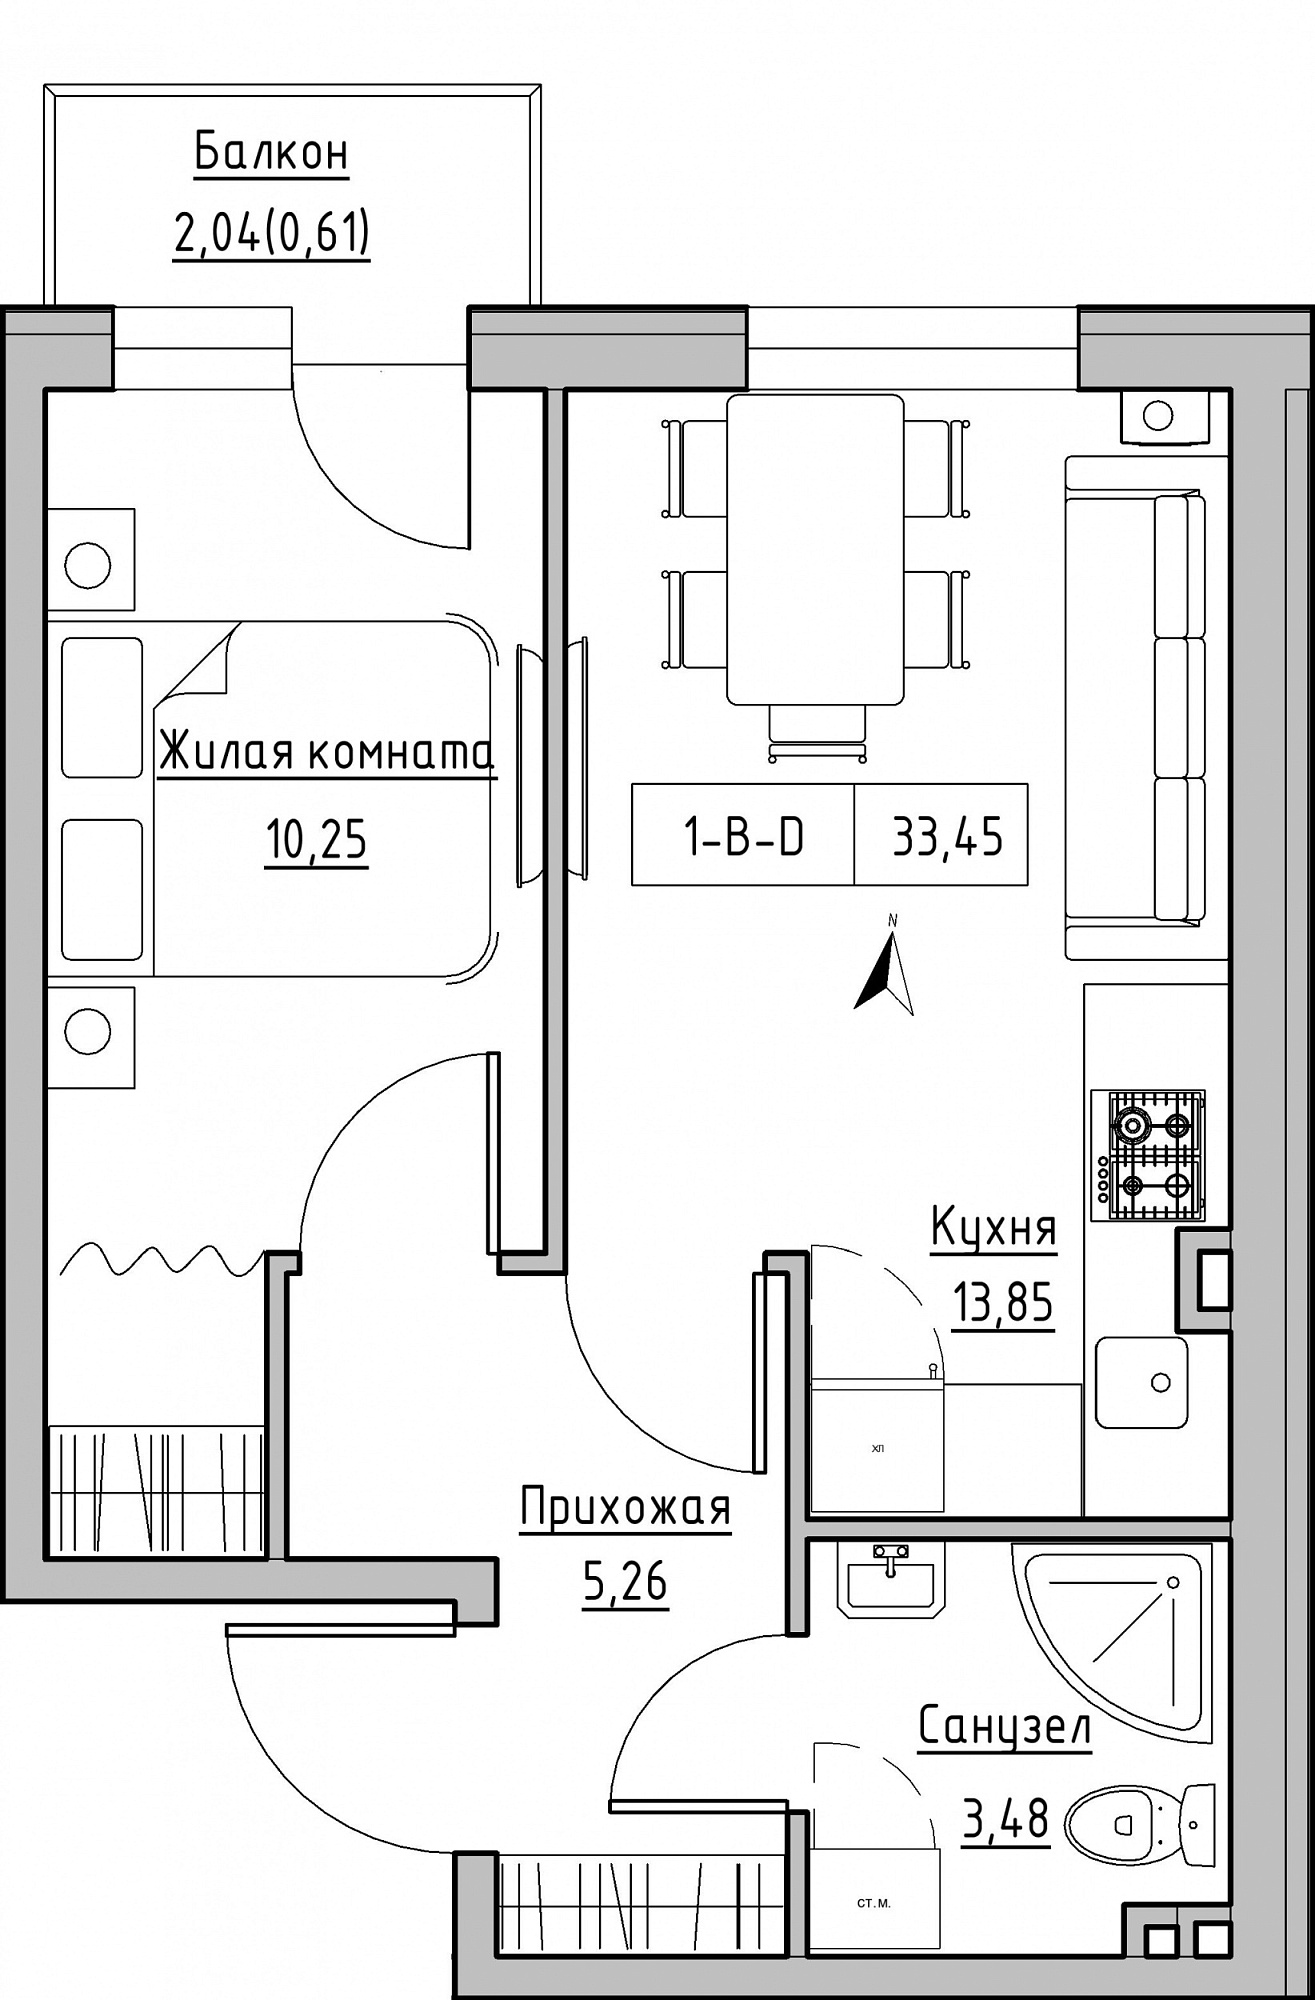 Planning 1-rm flats area 33.45m2, KS-024-03/0003.